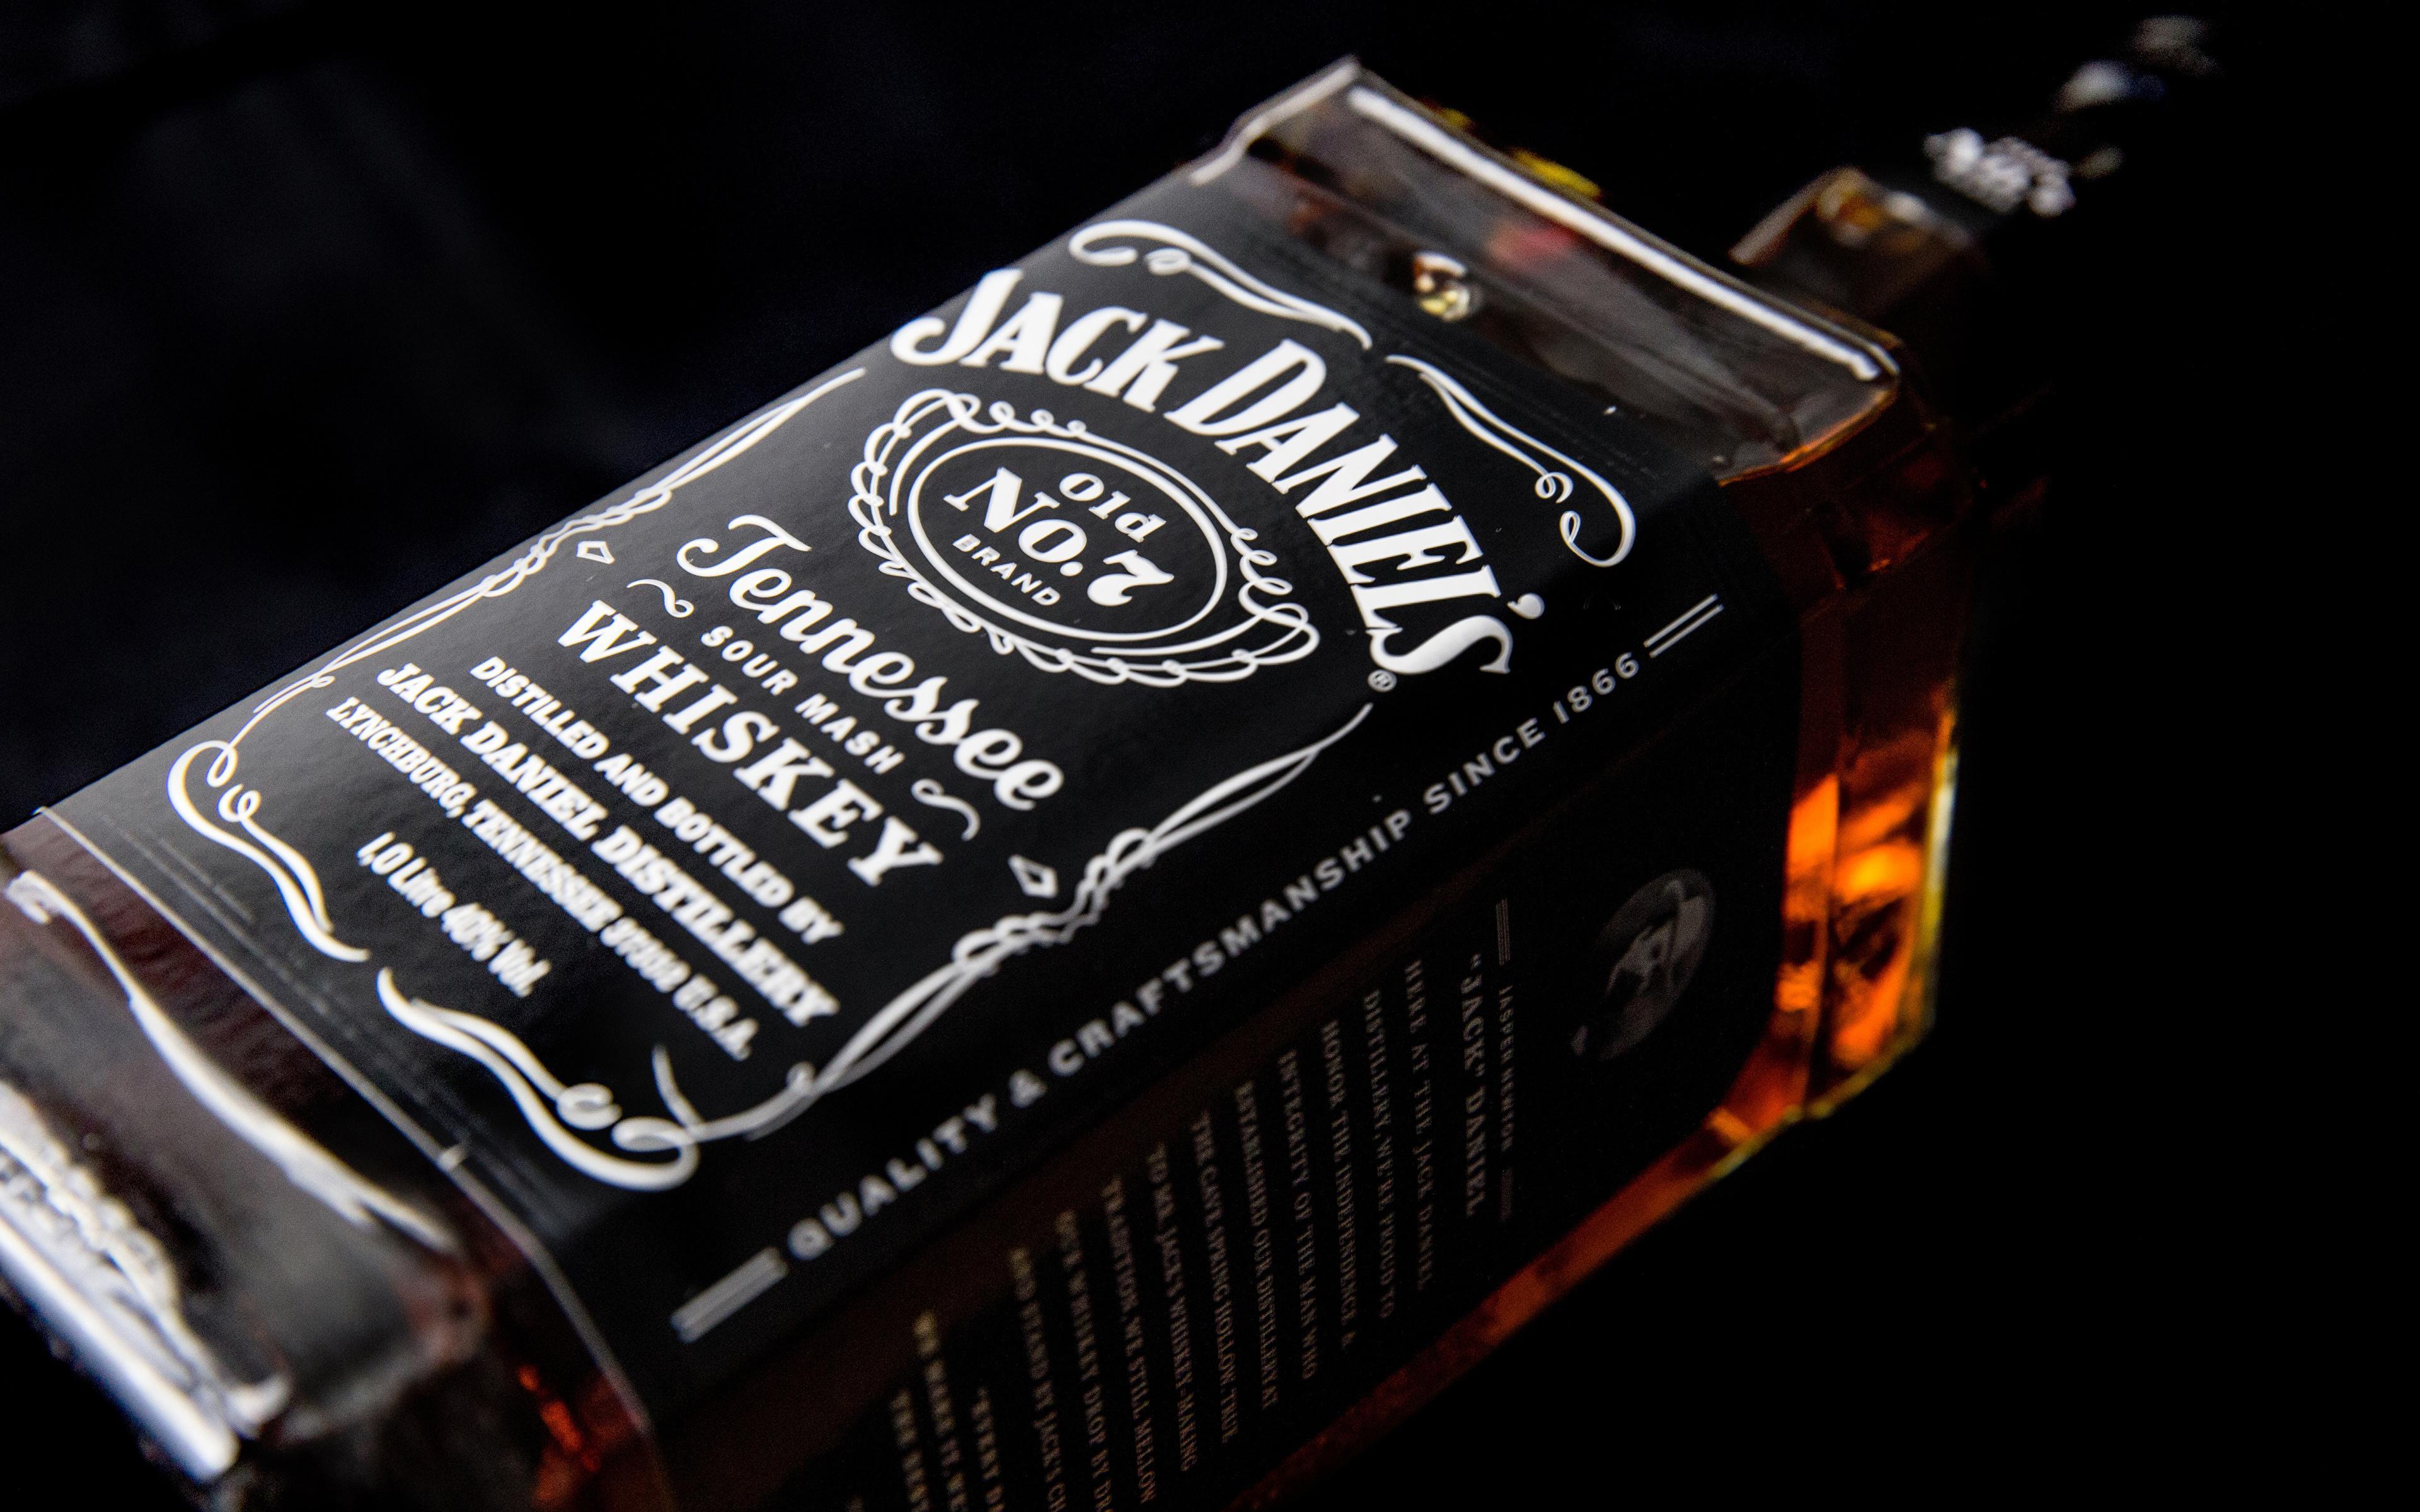 Wallpaper Jack Daniel's Bottle Brands Black background 3840x2400